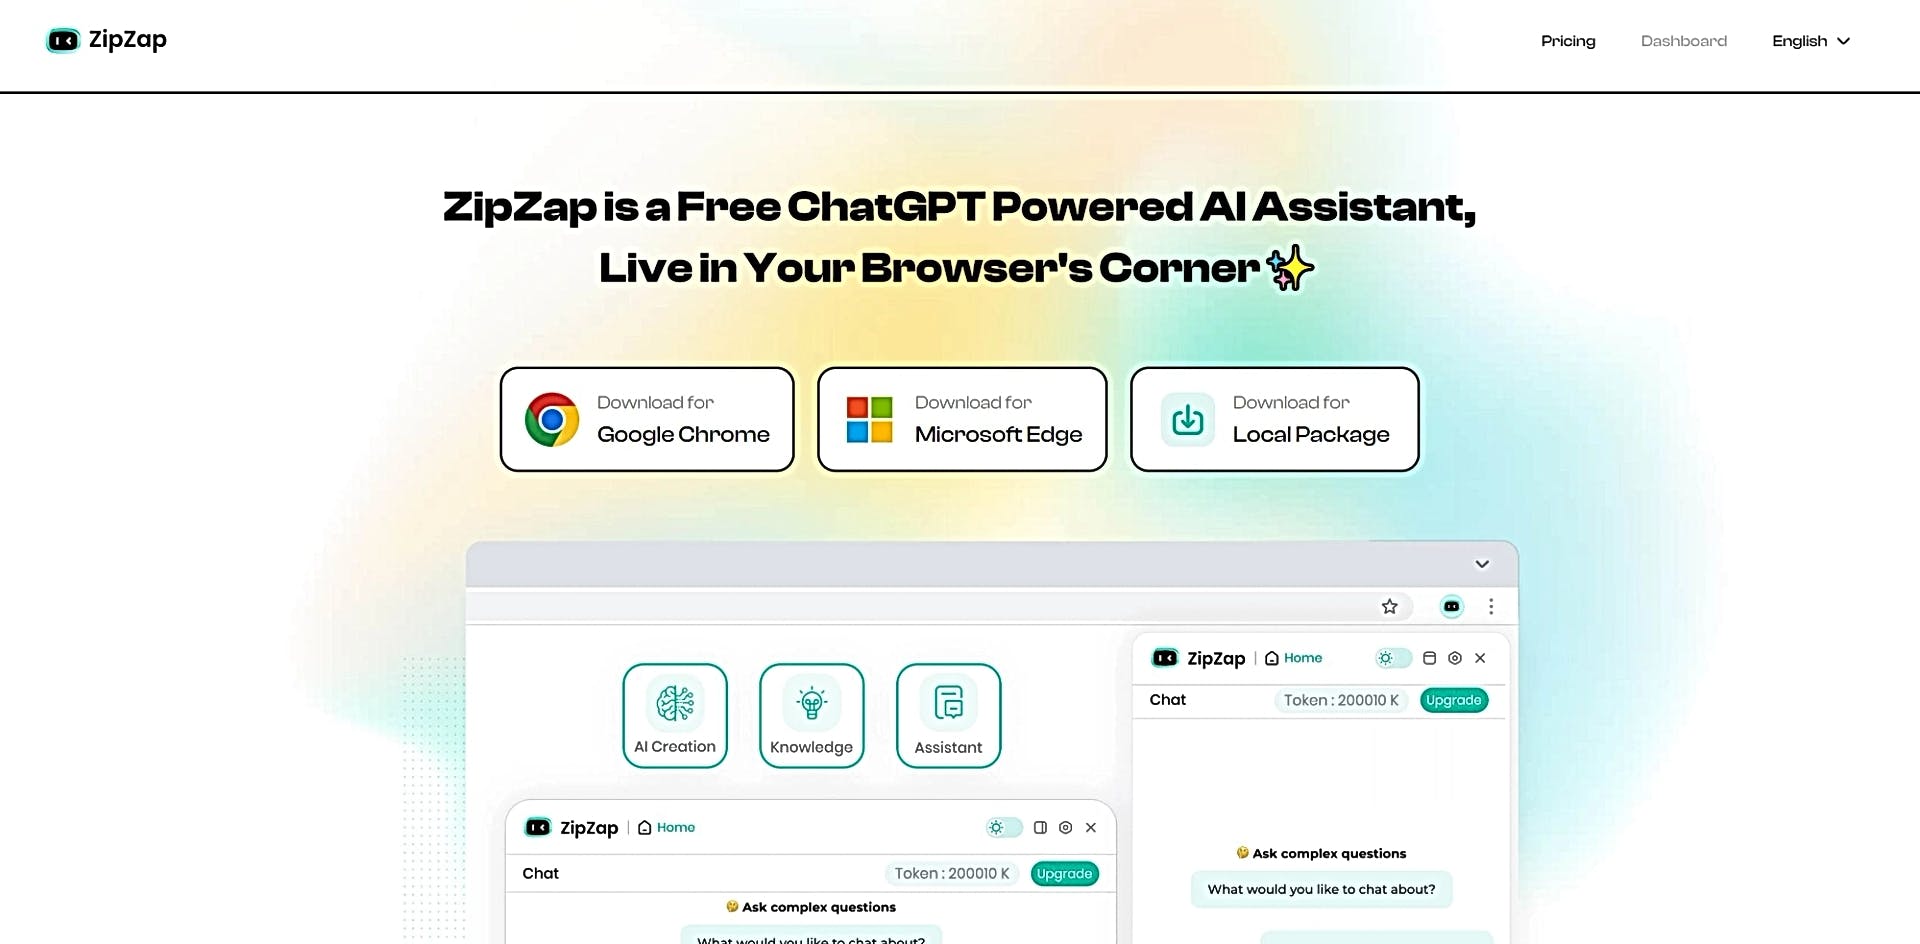 ZipZap featured